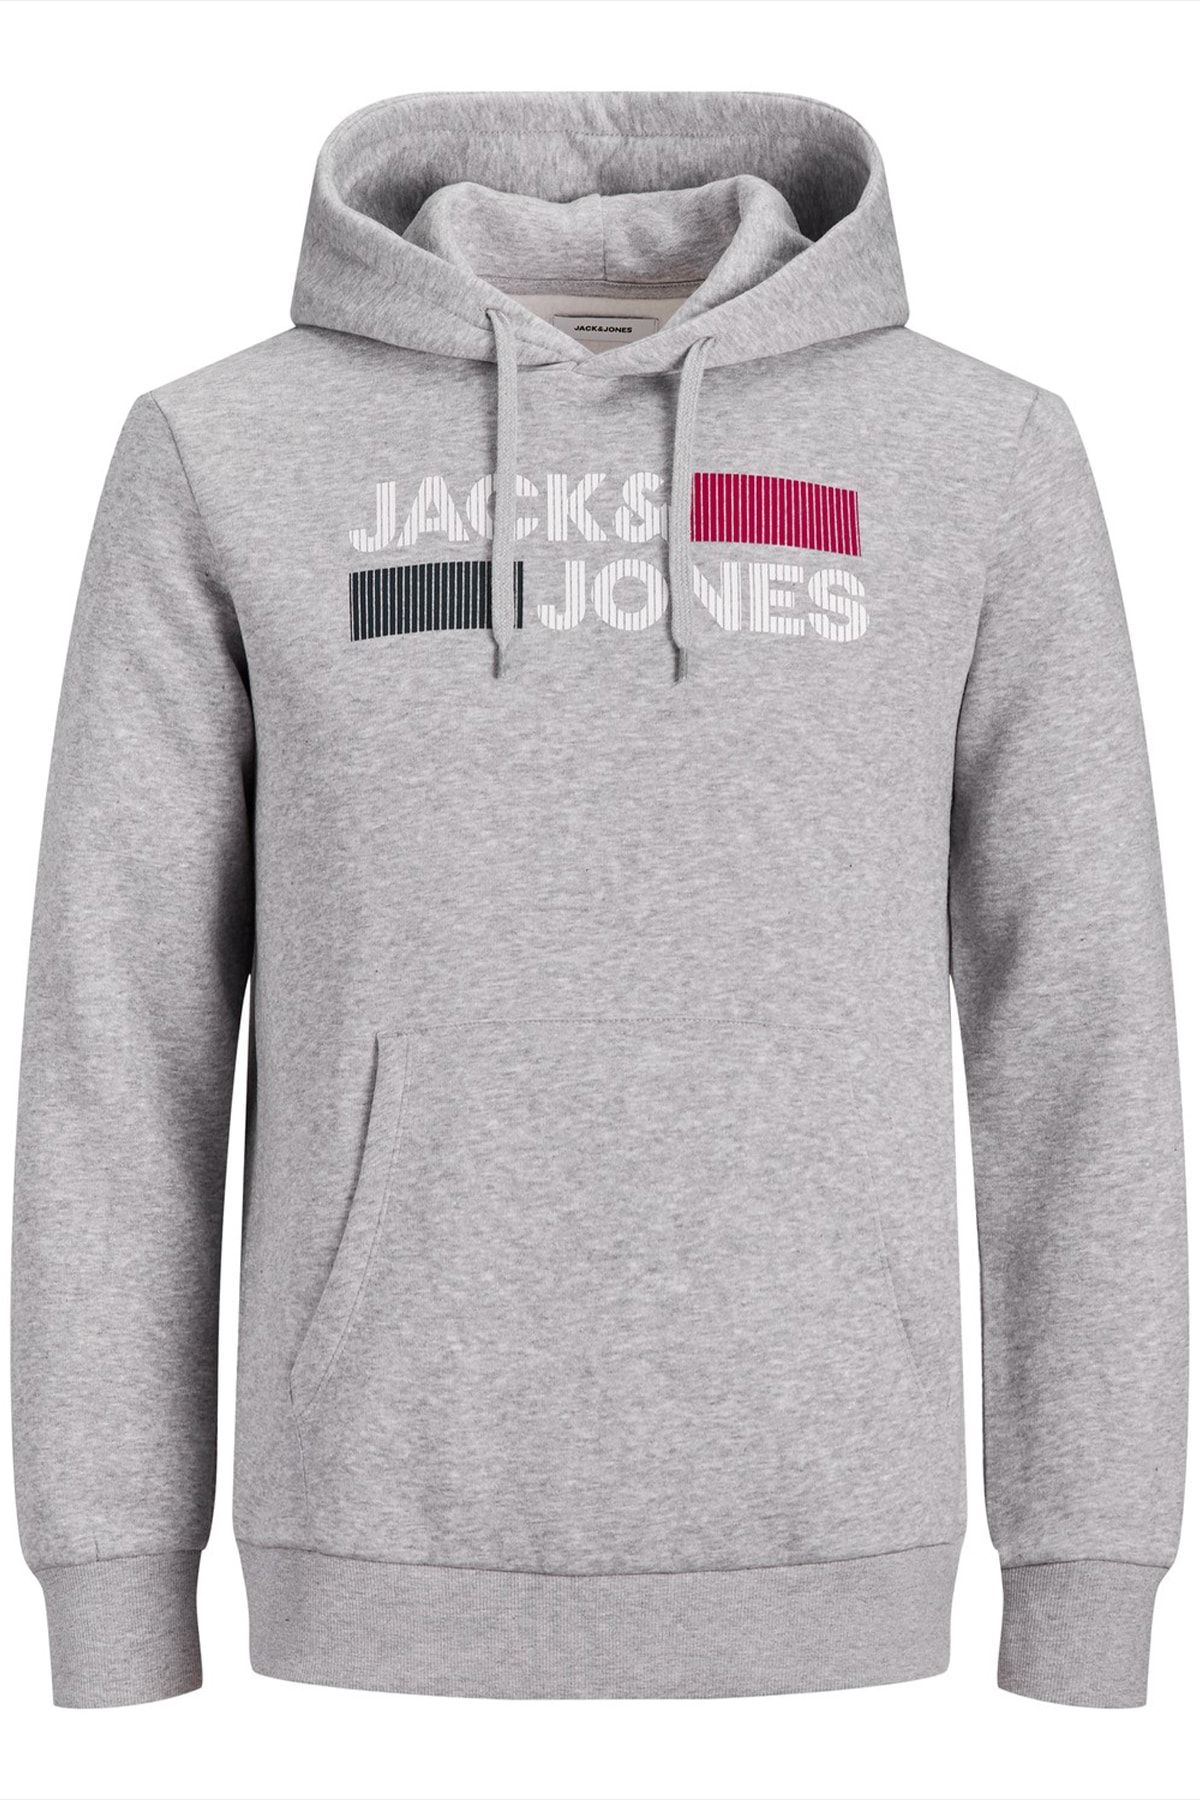 Jack & Jones Erkek Gri Kapüşonlu Sweatshirt - 12152840.